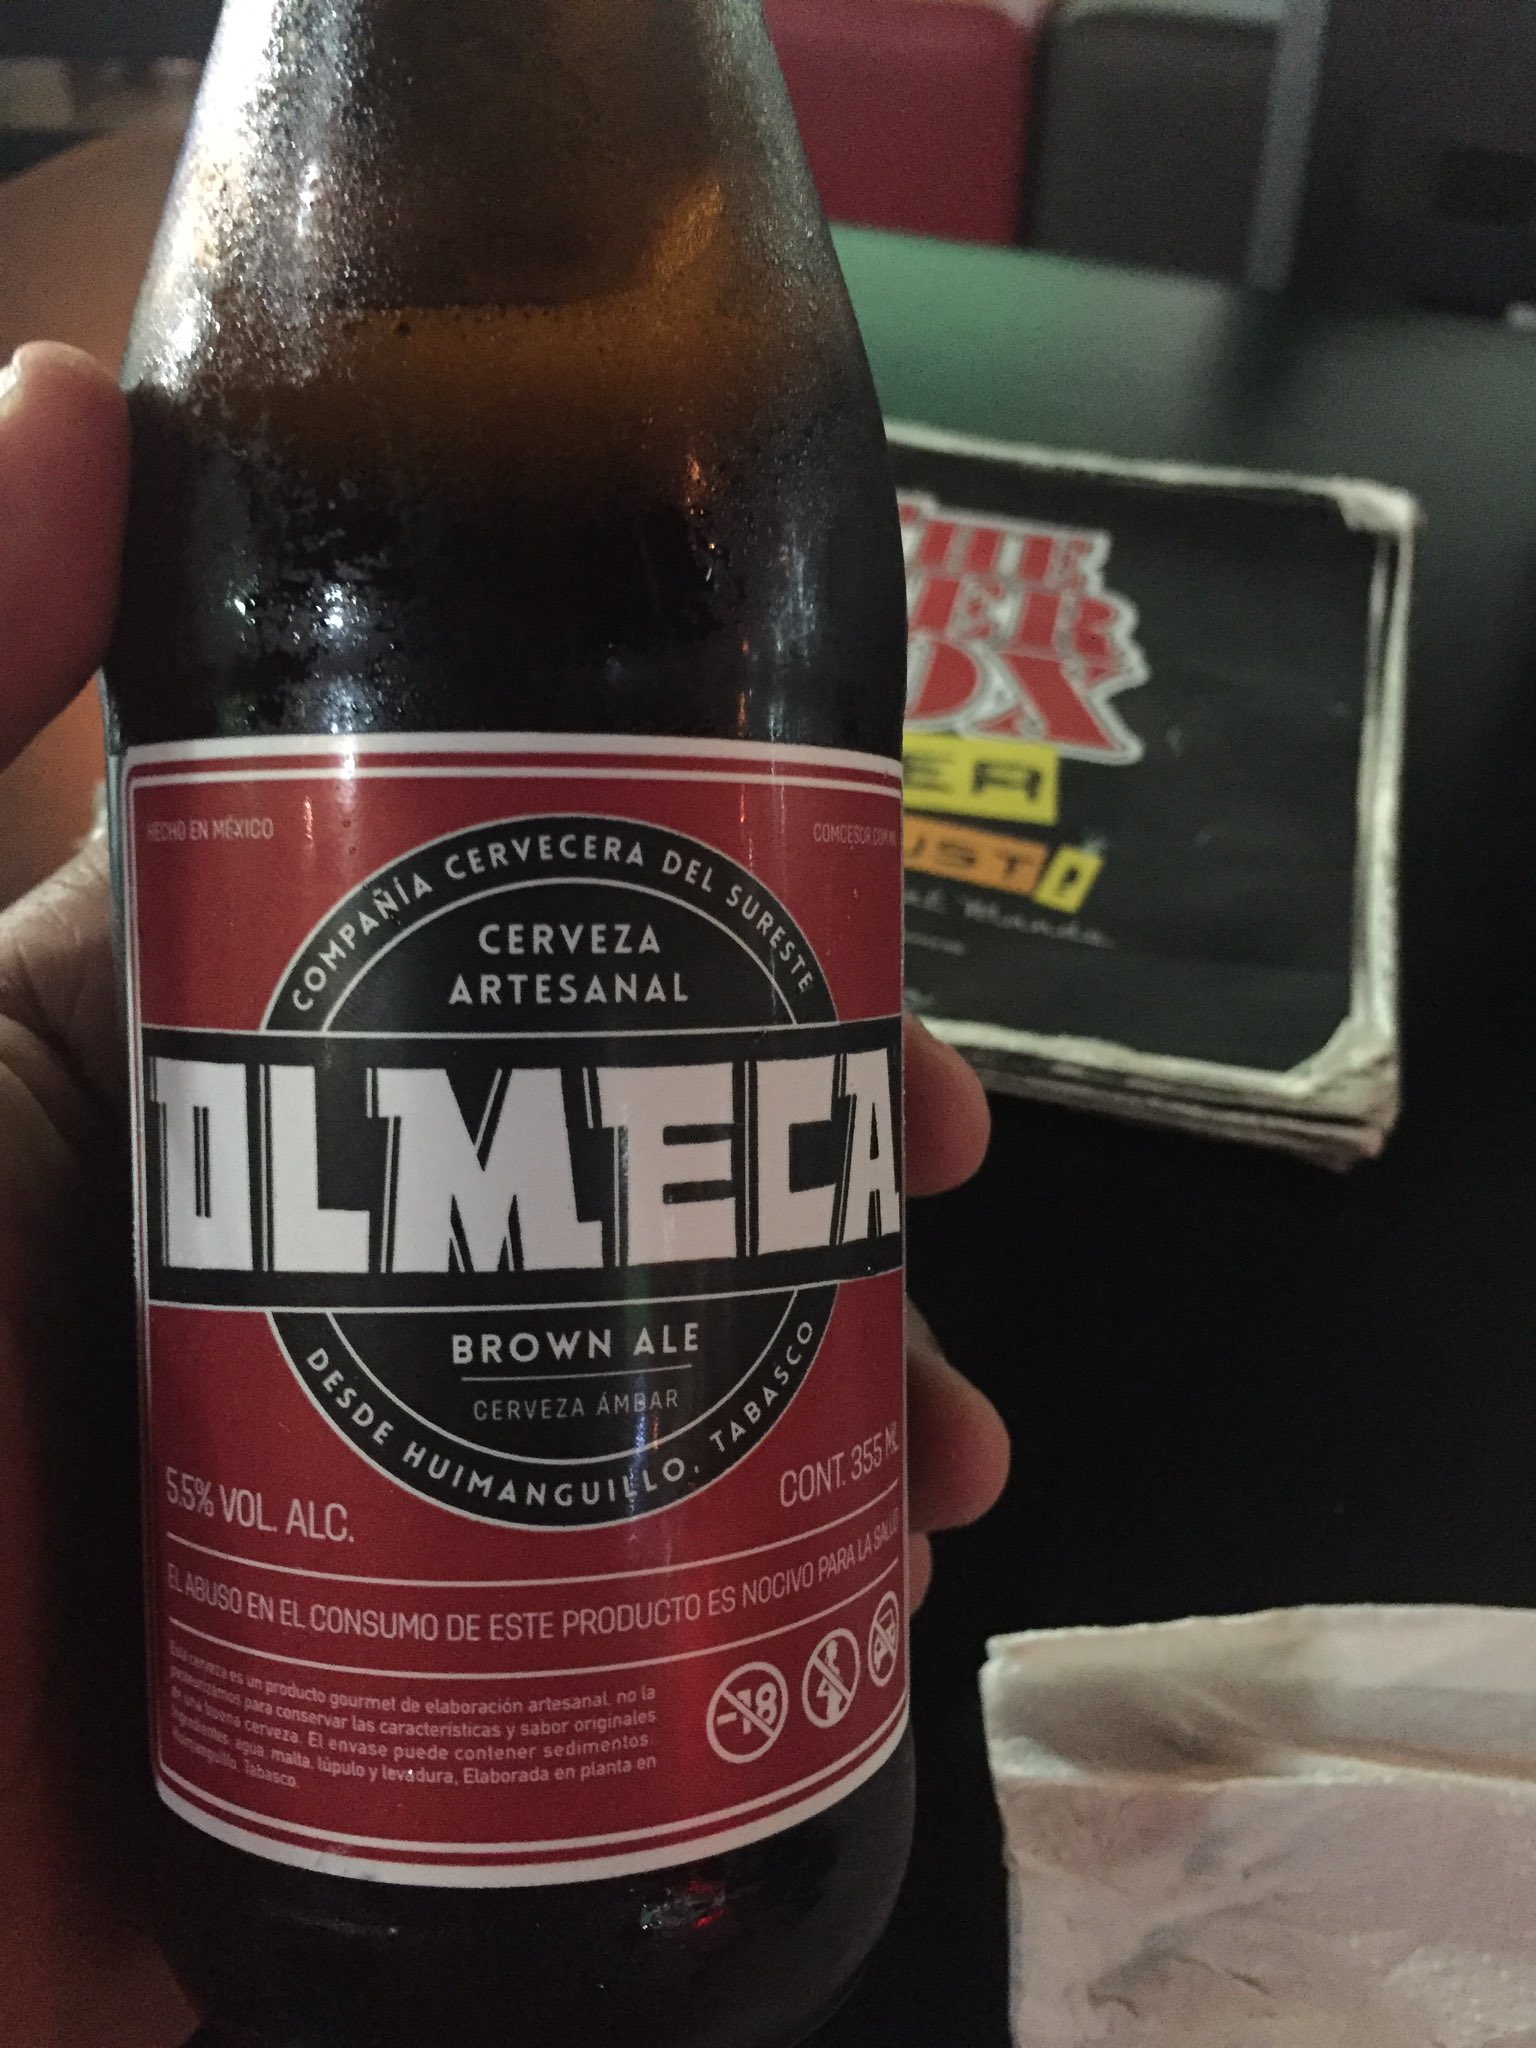 Juan Connor. on Twitter: "Que sabor me ayer la Cerveza #Olmeca. https://t.co/Jwmmu2ptU4" / Twitter